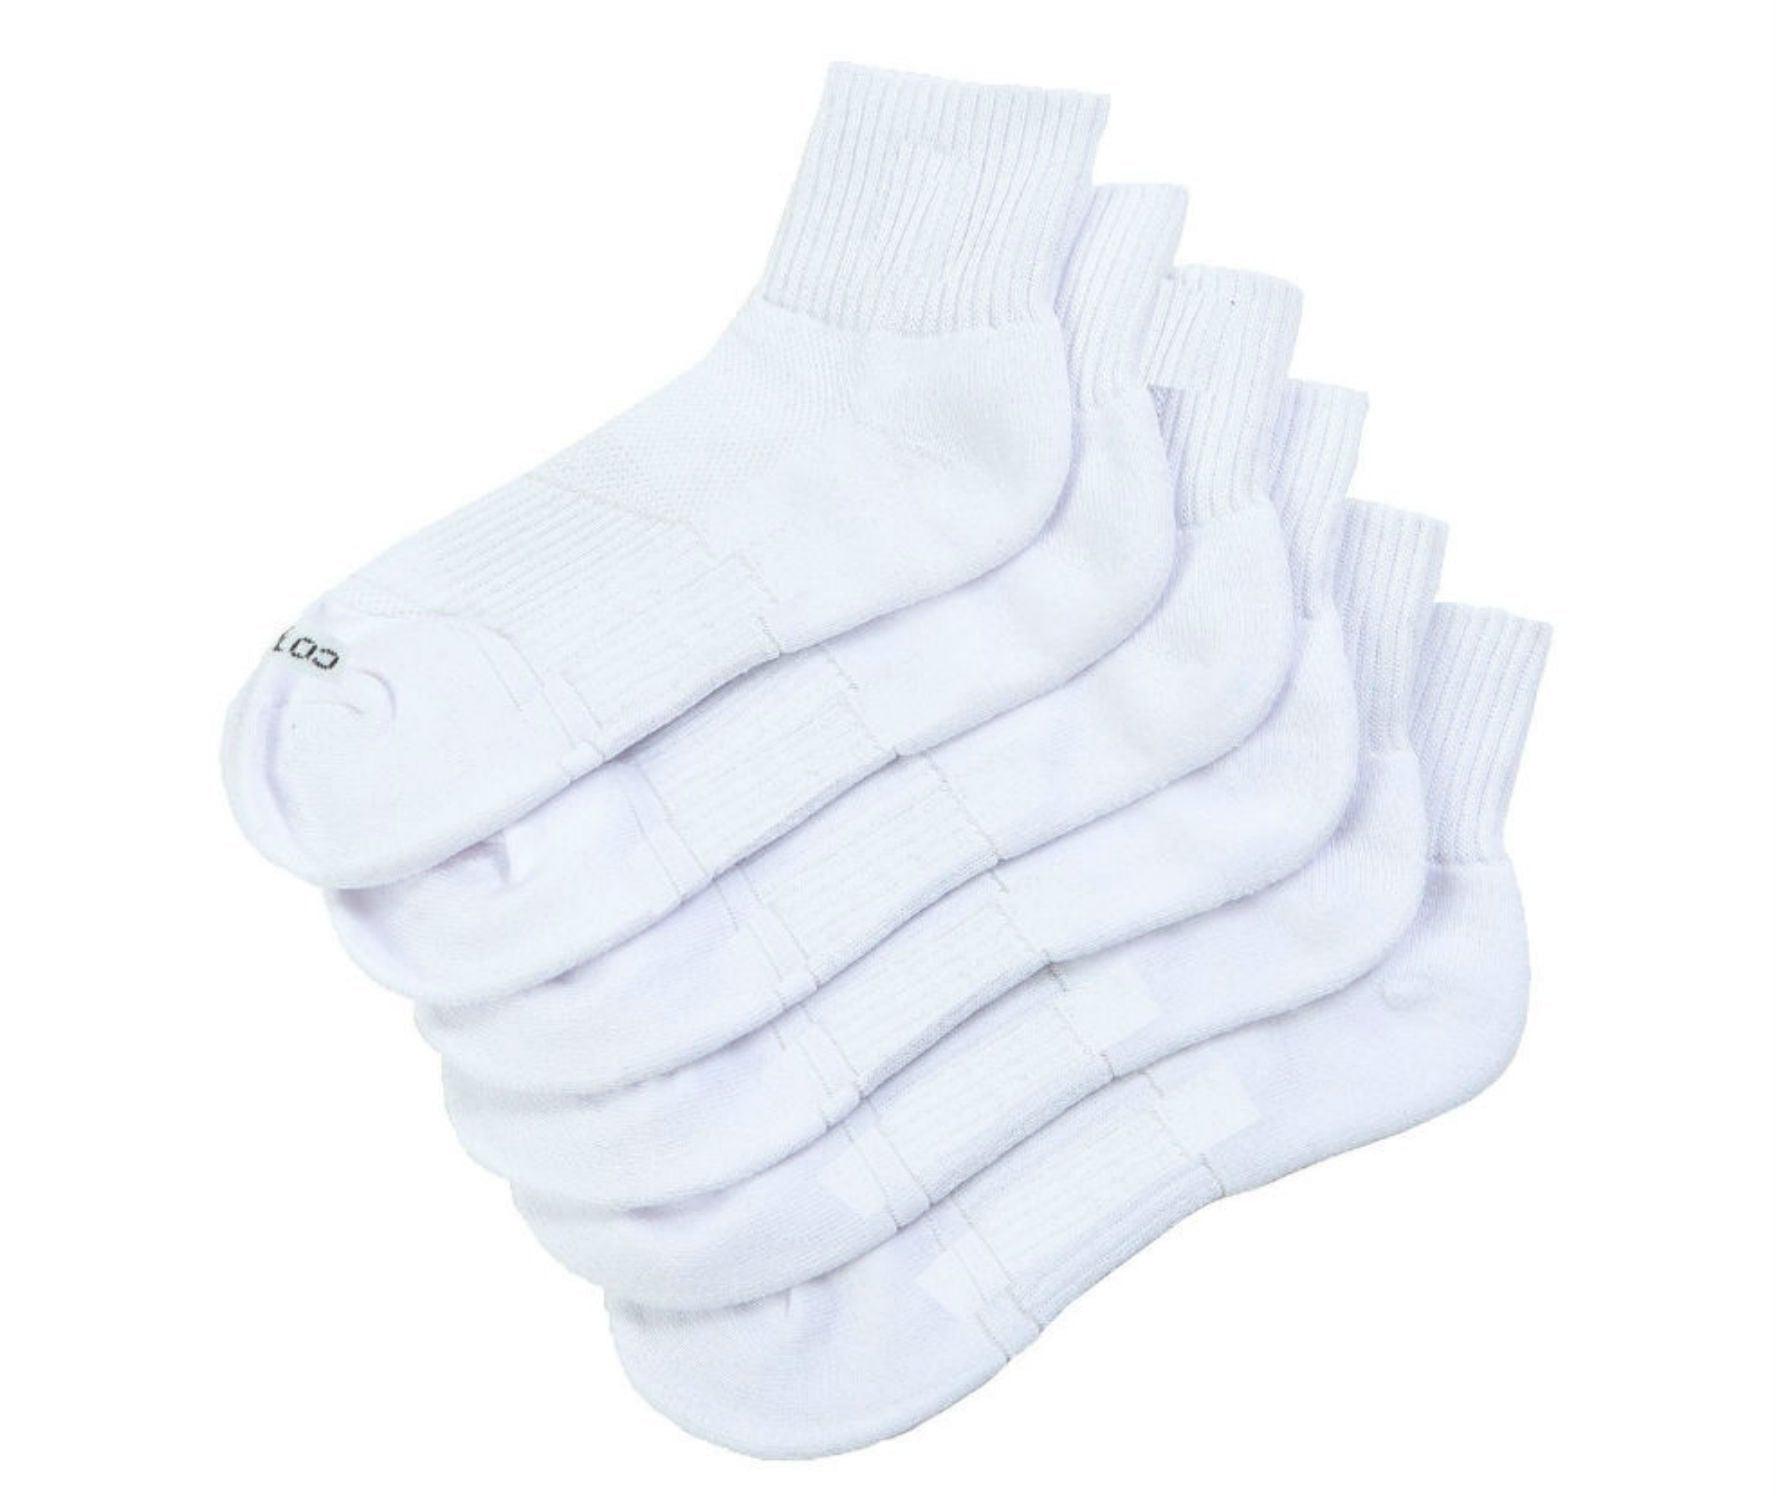 Rich Cotton Quarter Socks - DRI-FIT Cushioned Socks (White)